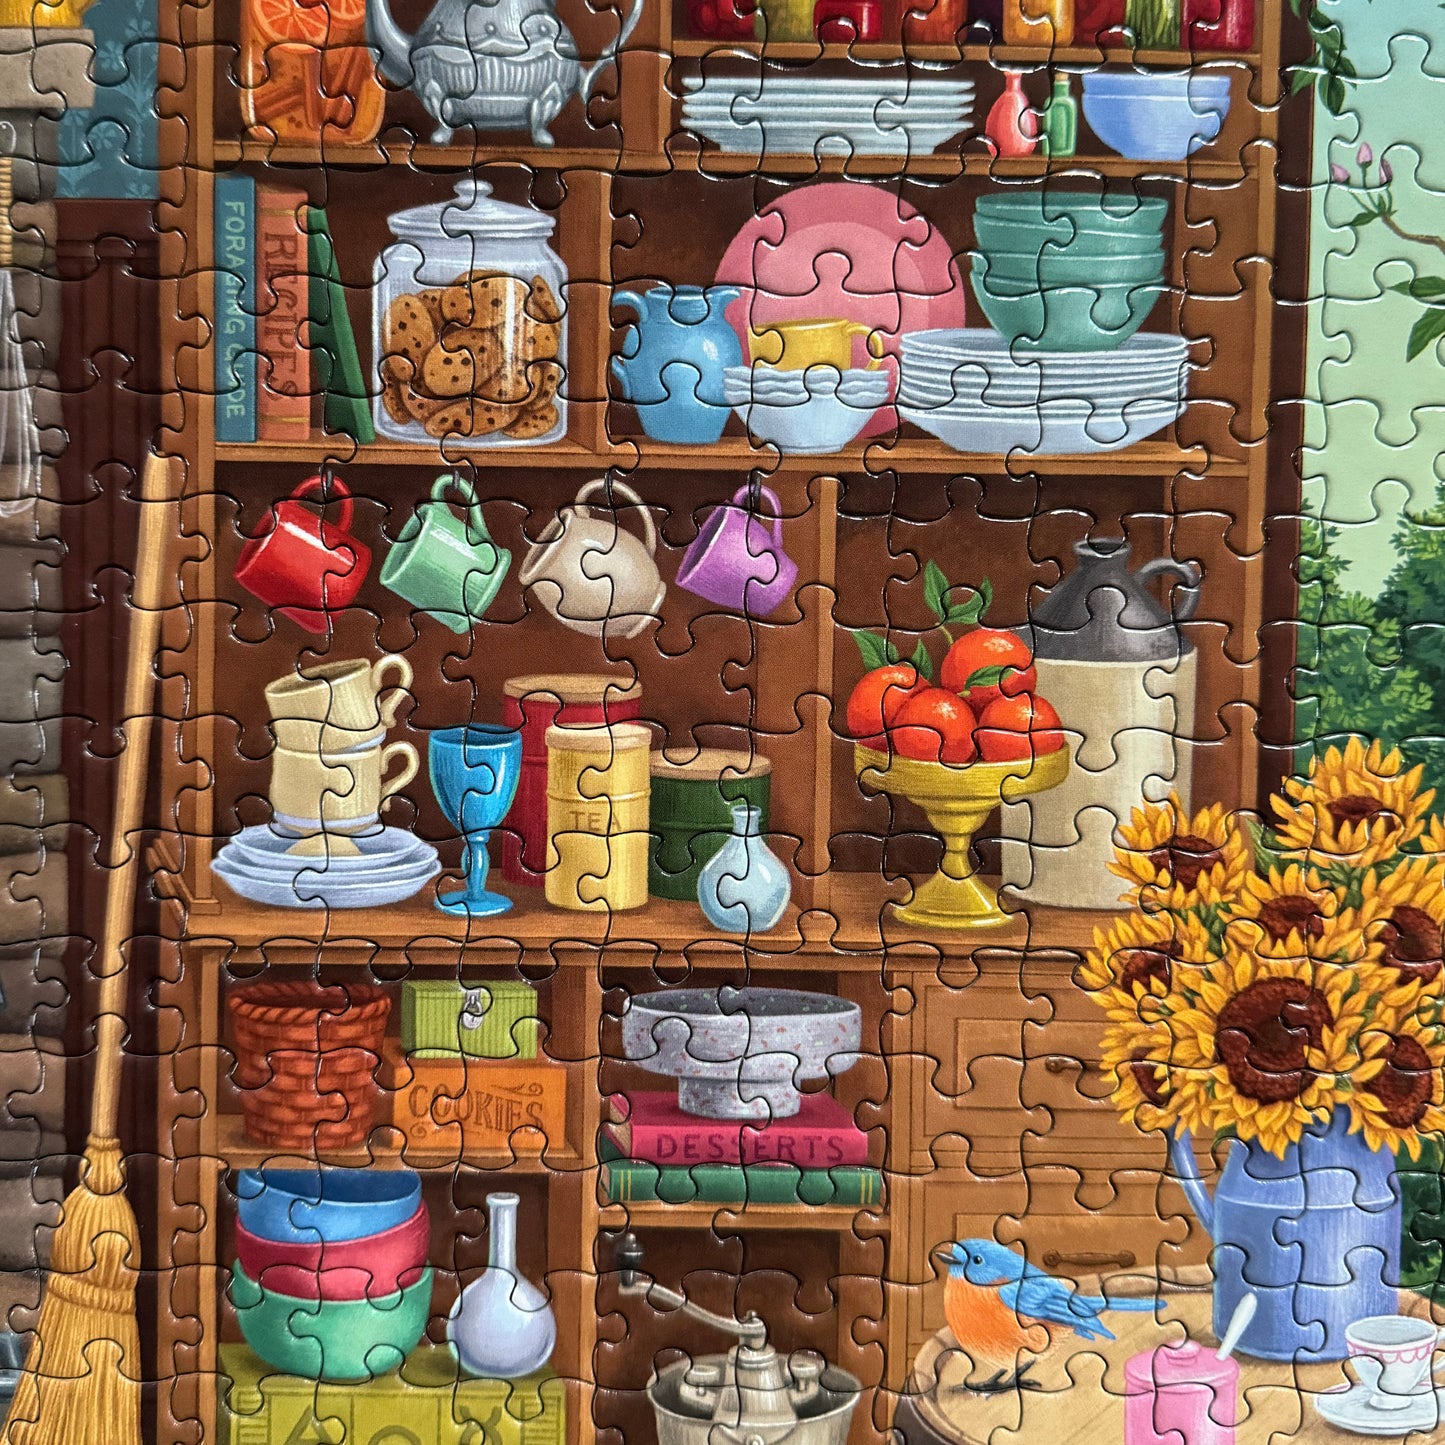 Alchemist's Kitchen 1000 Piece Puzzle by eeBoo | Unique Beautiful Gifts